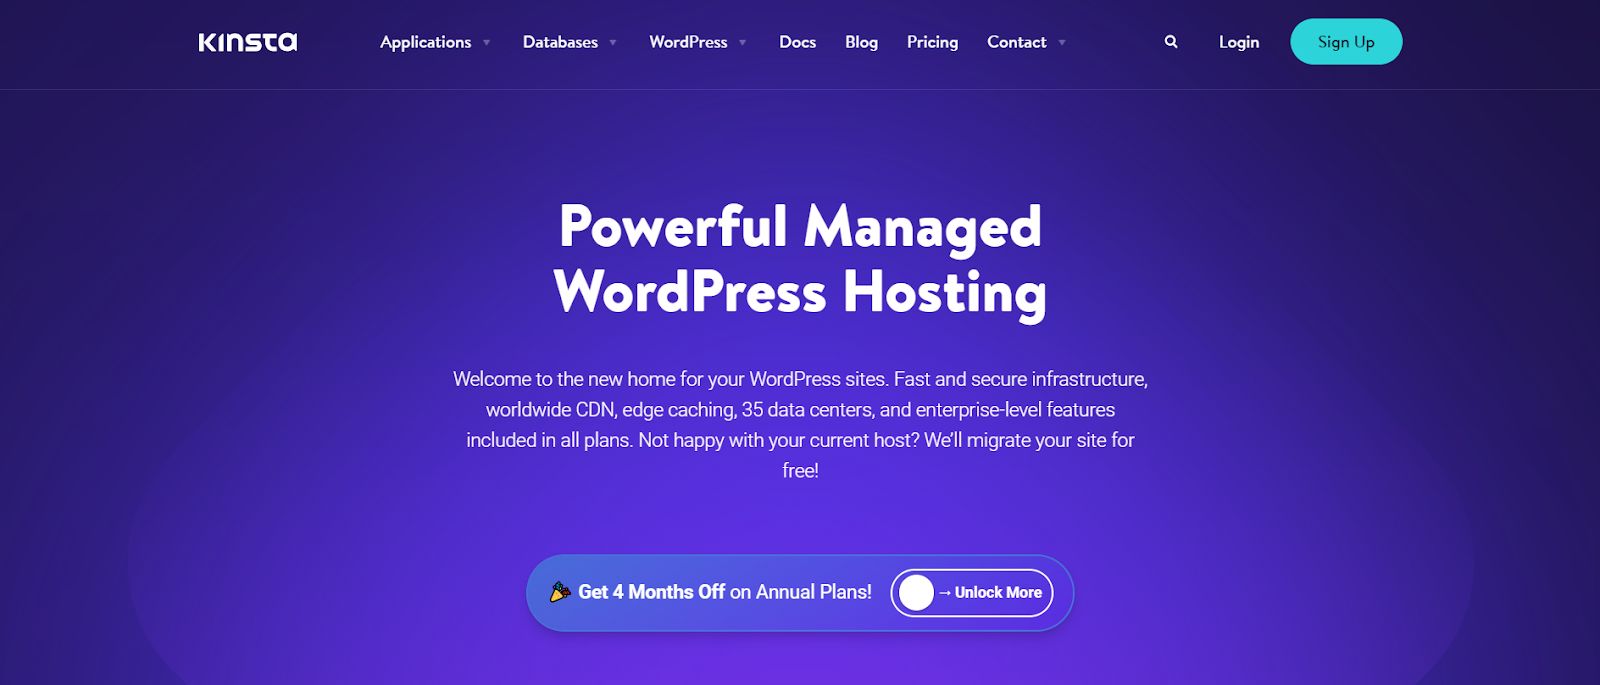 Kinsta WordPress hosting page.